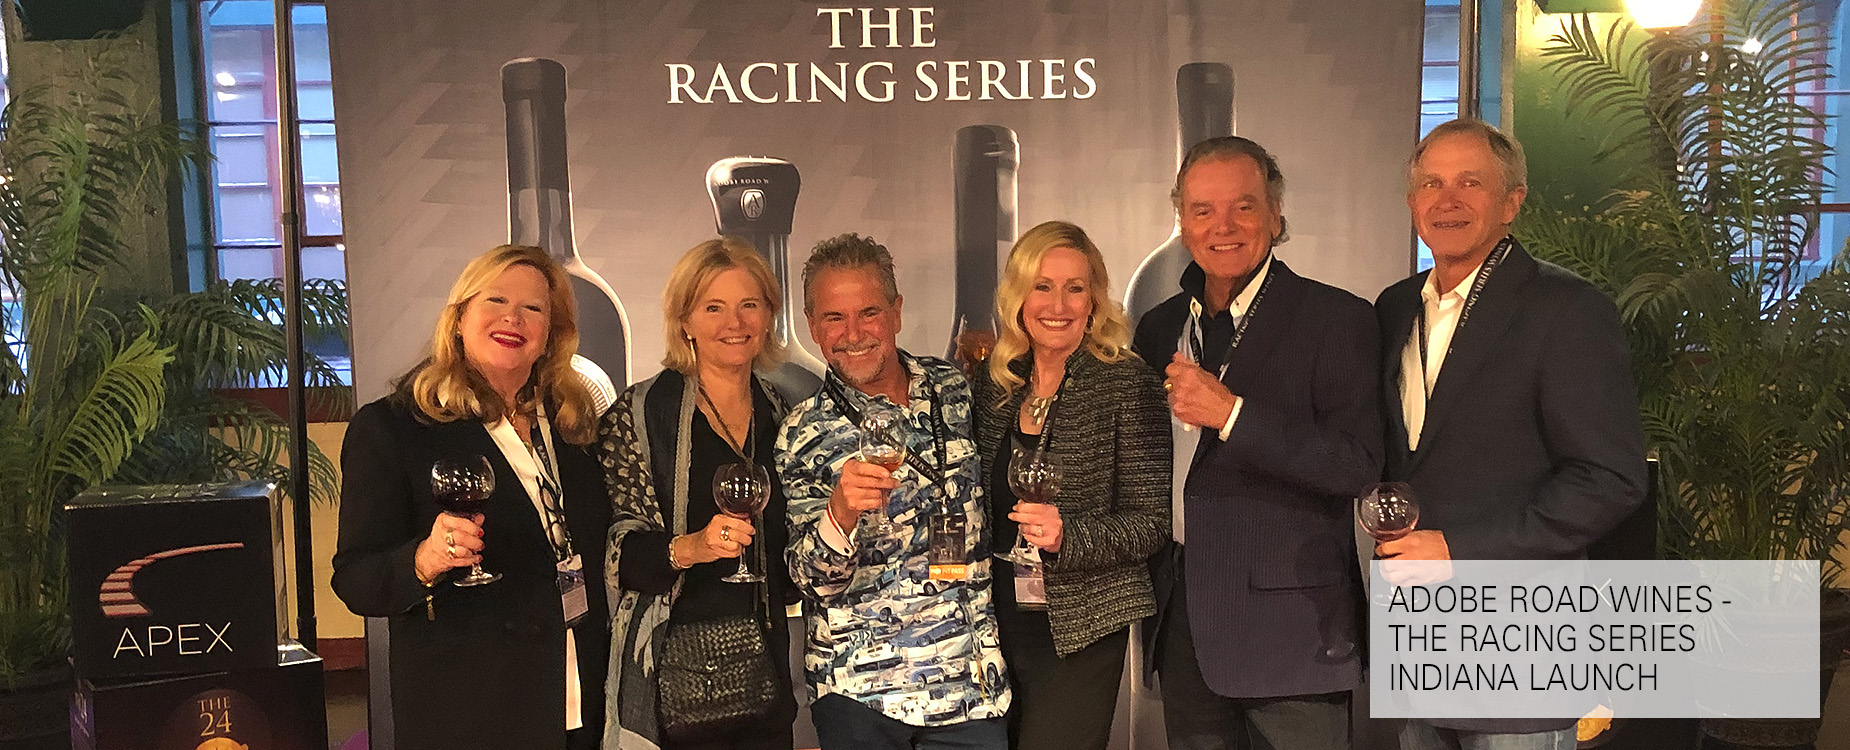 Adobe Road Winery - The Racing Series